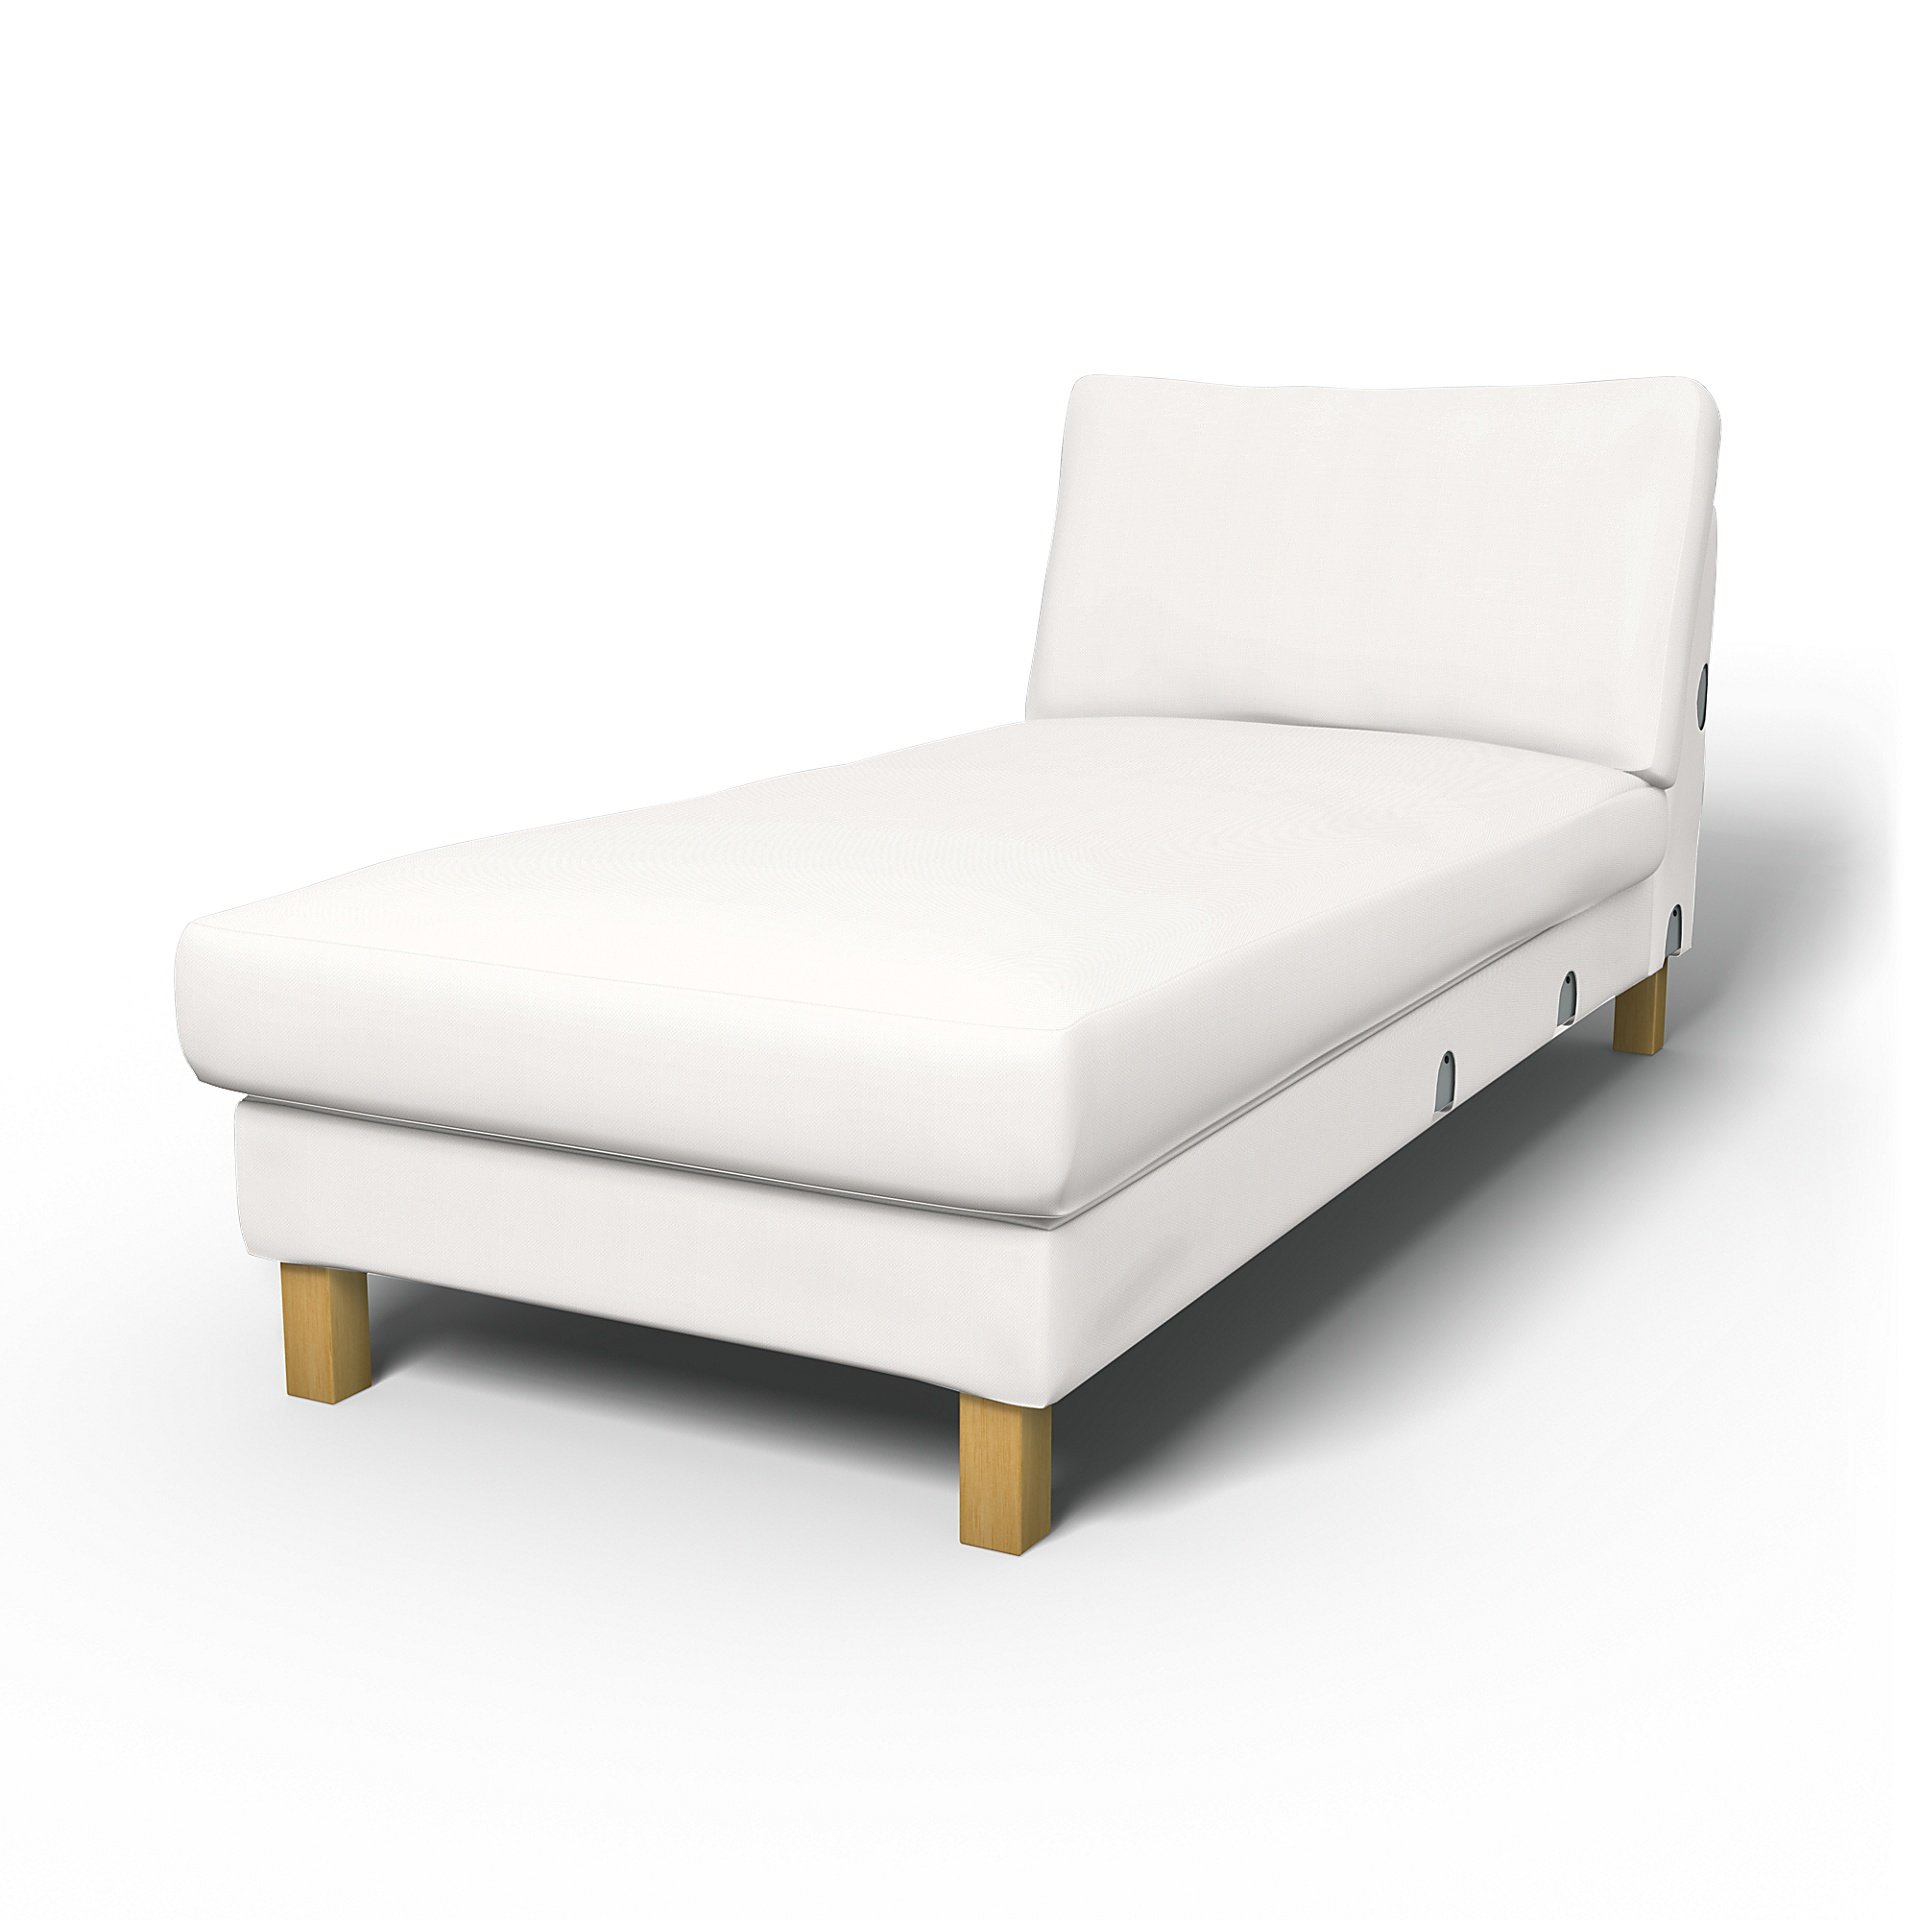 IKEA - Karlstad Chaise Longue Add-on Unit Cover, Soft White, Linen - Bemz